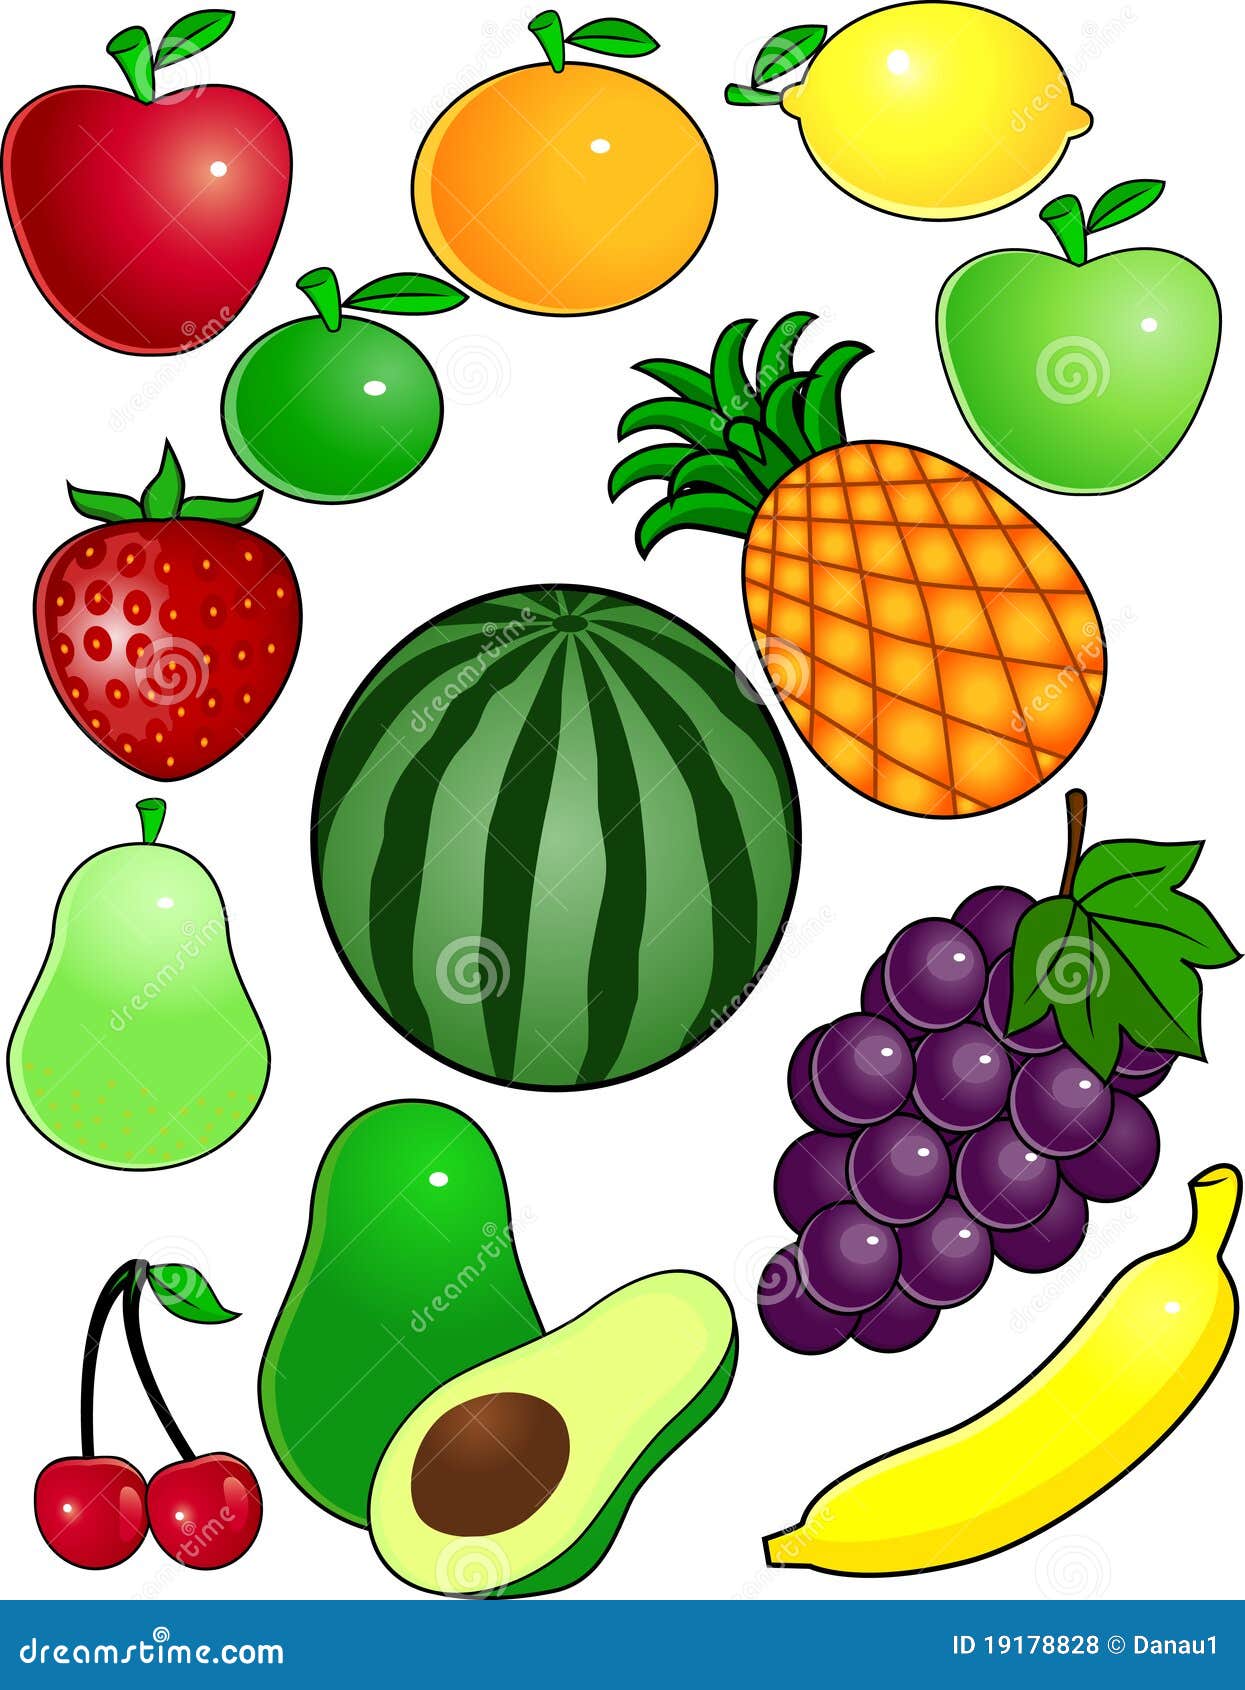 Fruit Cartoon Royalty Free Stock Photos - Image: 19178828